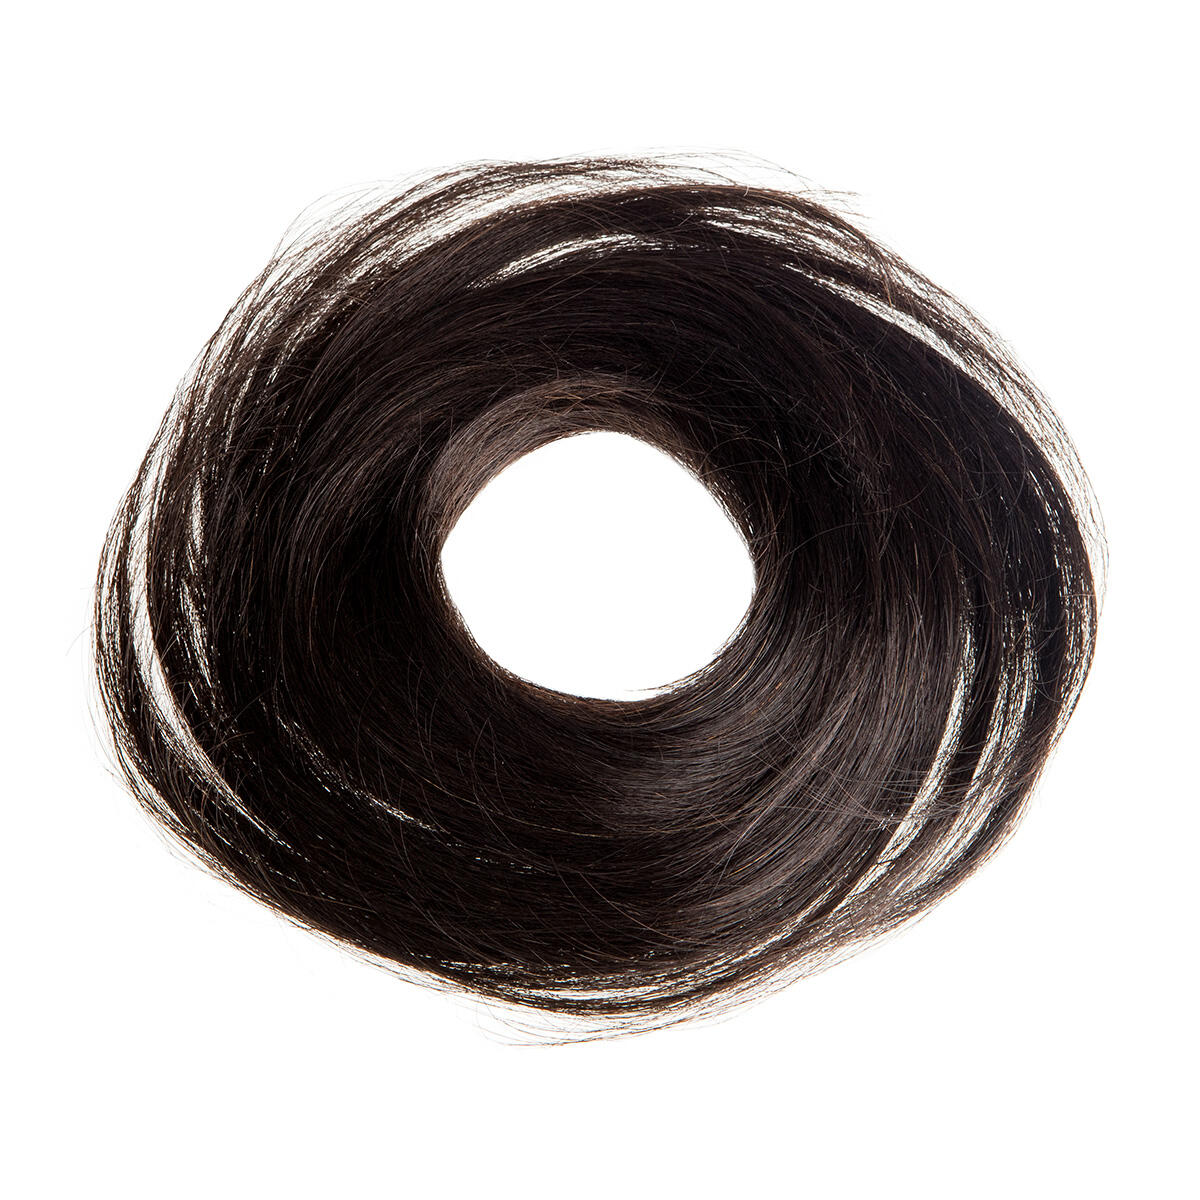 Hair Scrunchie 20 G Scrunchie with real hair 1.2 Black Brown